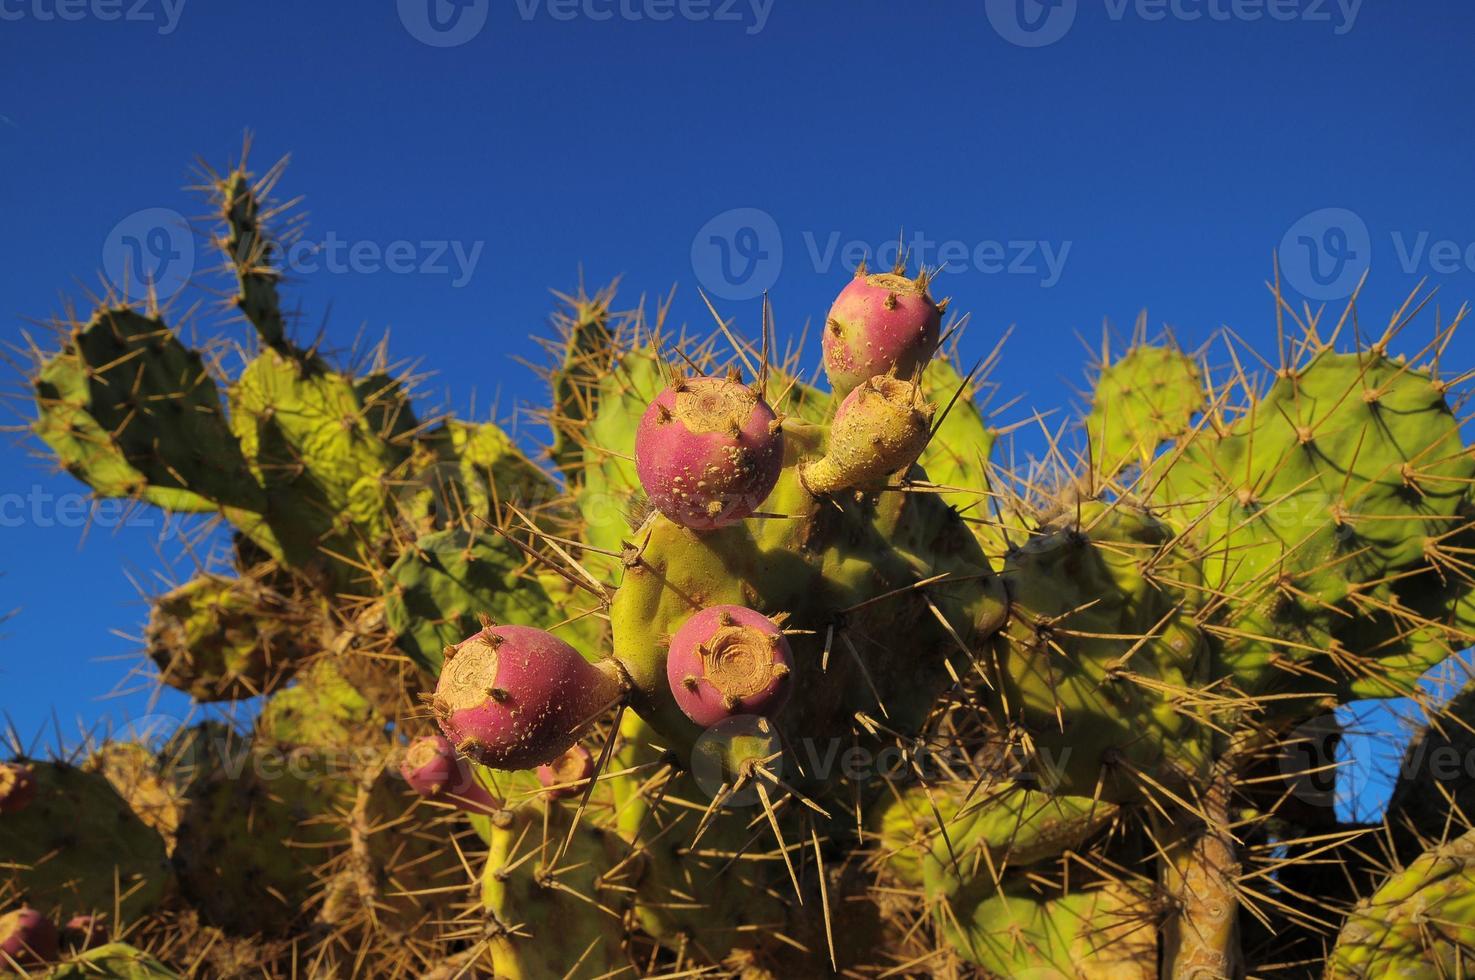 Cactus close-up view photo